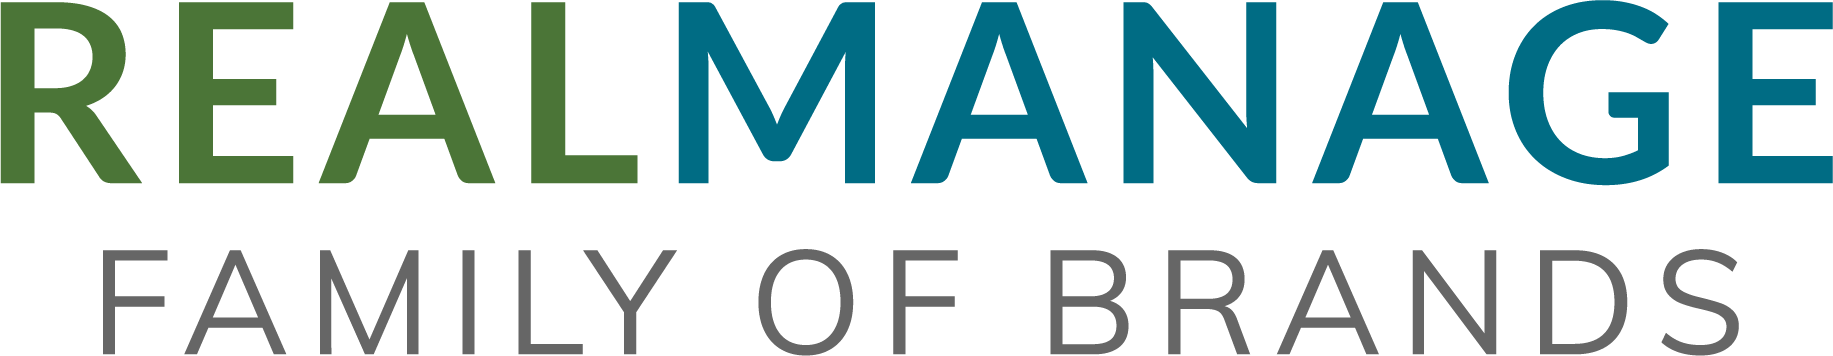 RealManage Family of Brands - Illinois logo